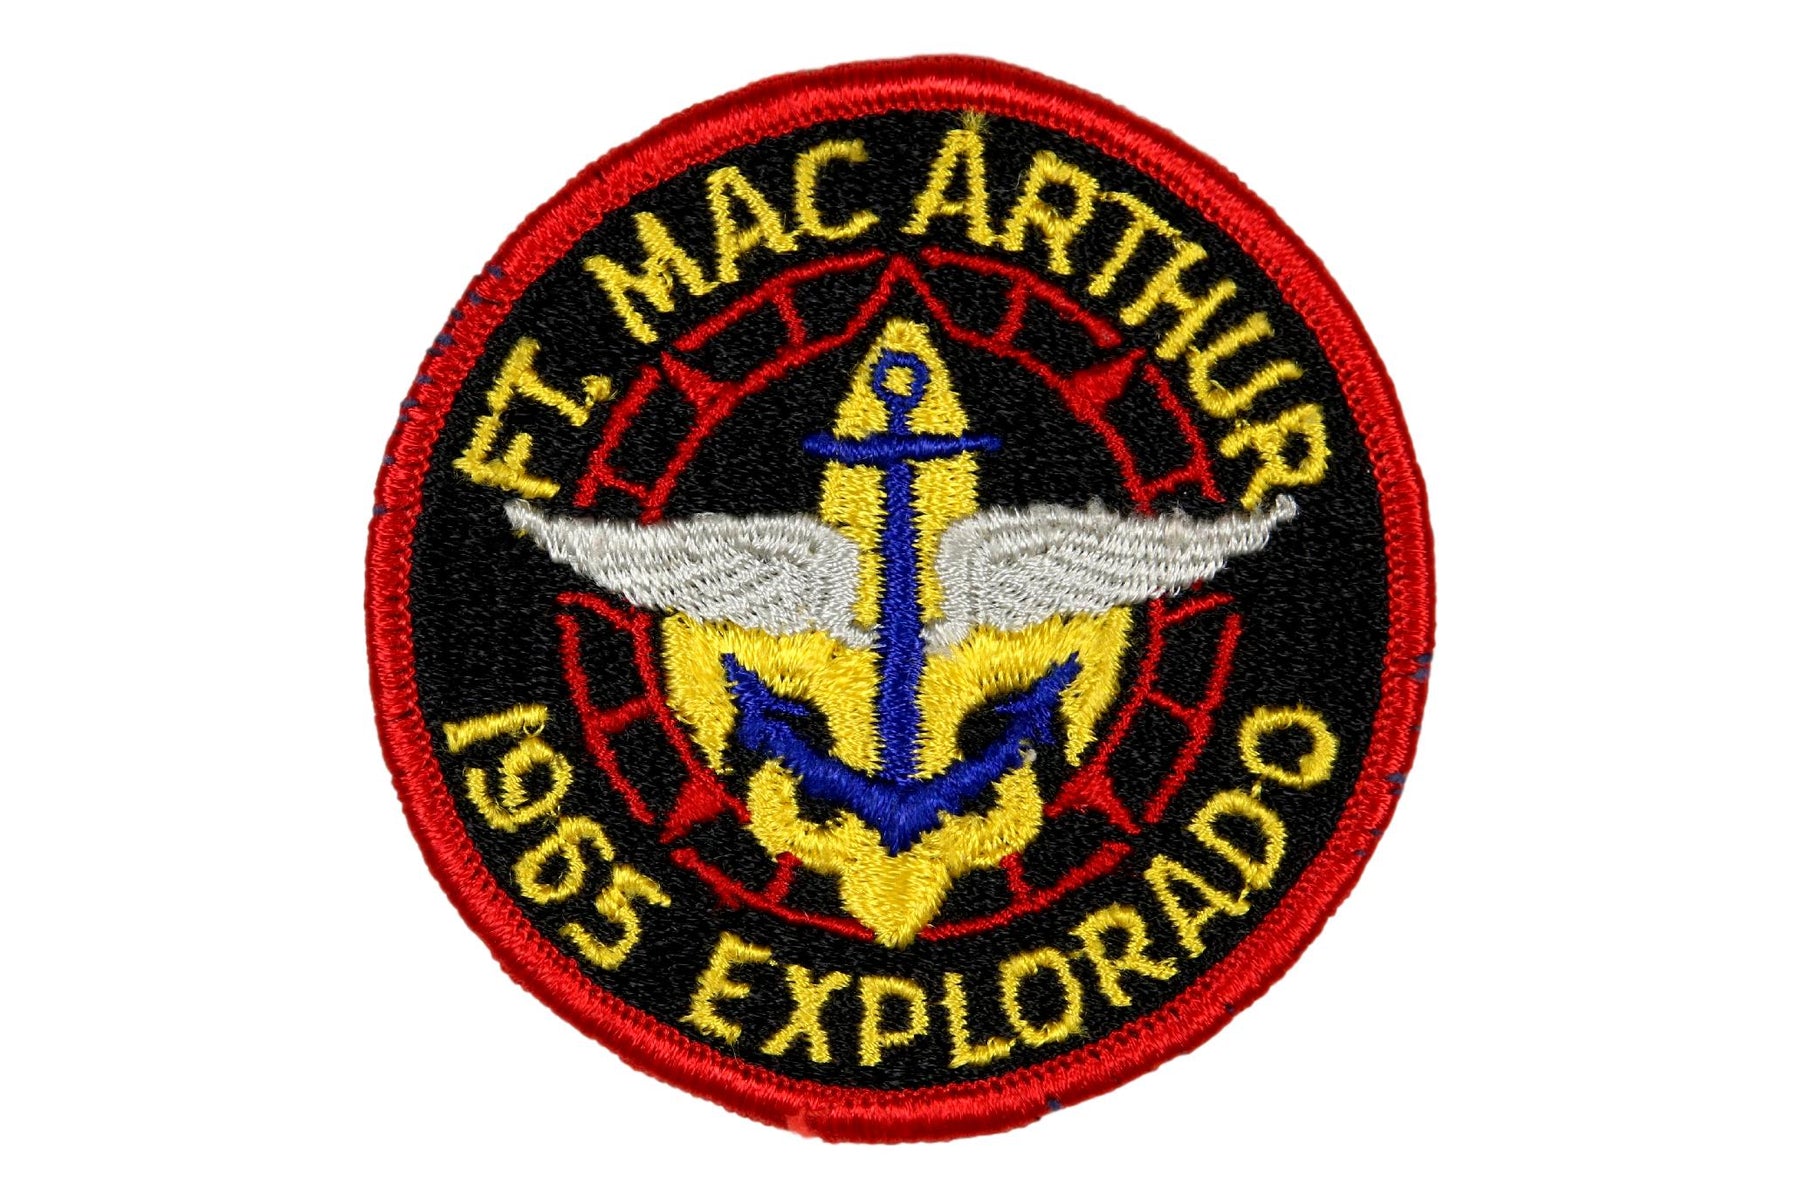 1965 Explorado Fort Mac Arthur Patch